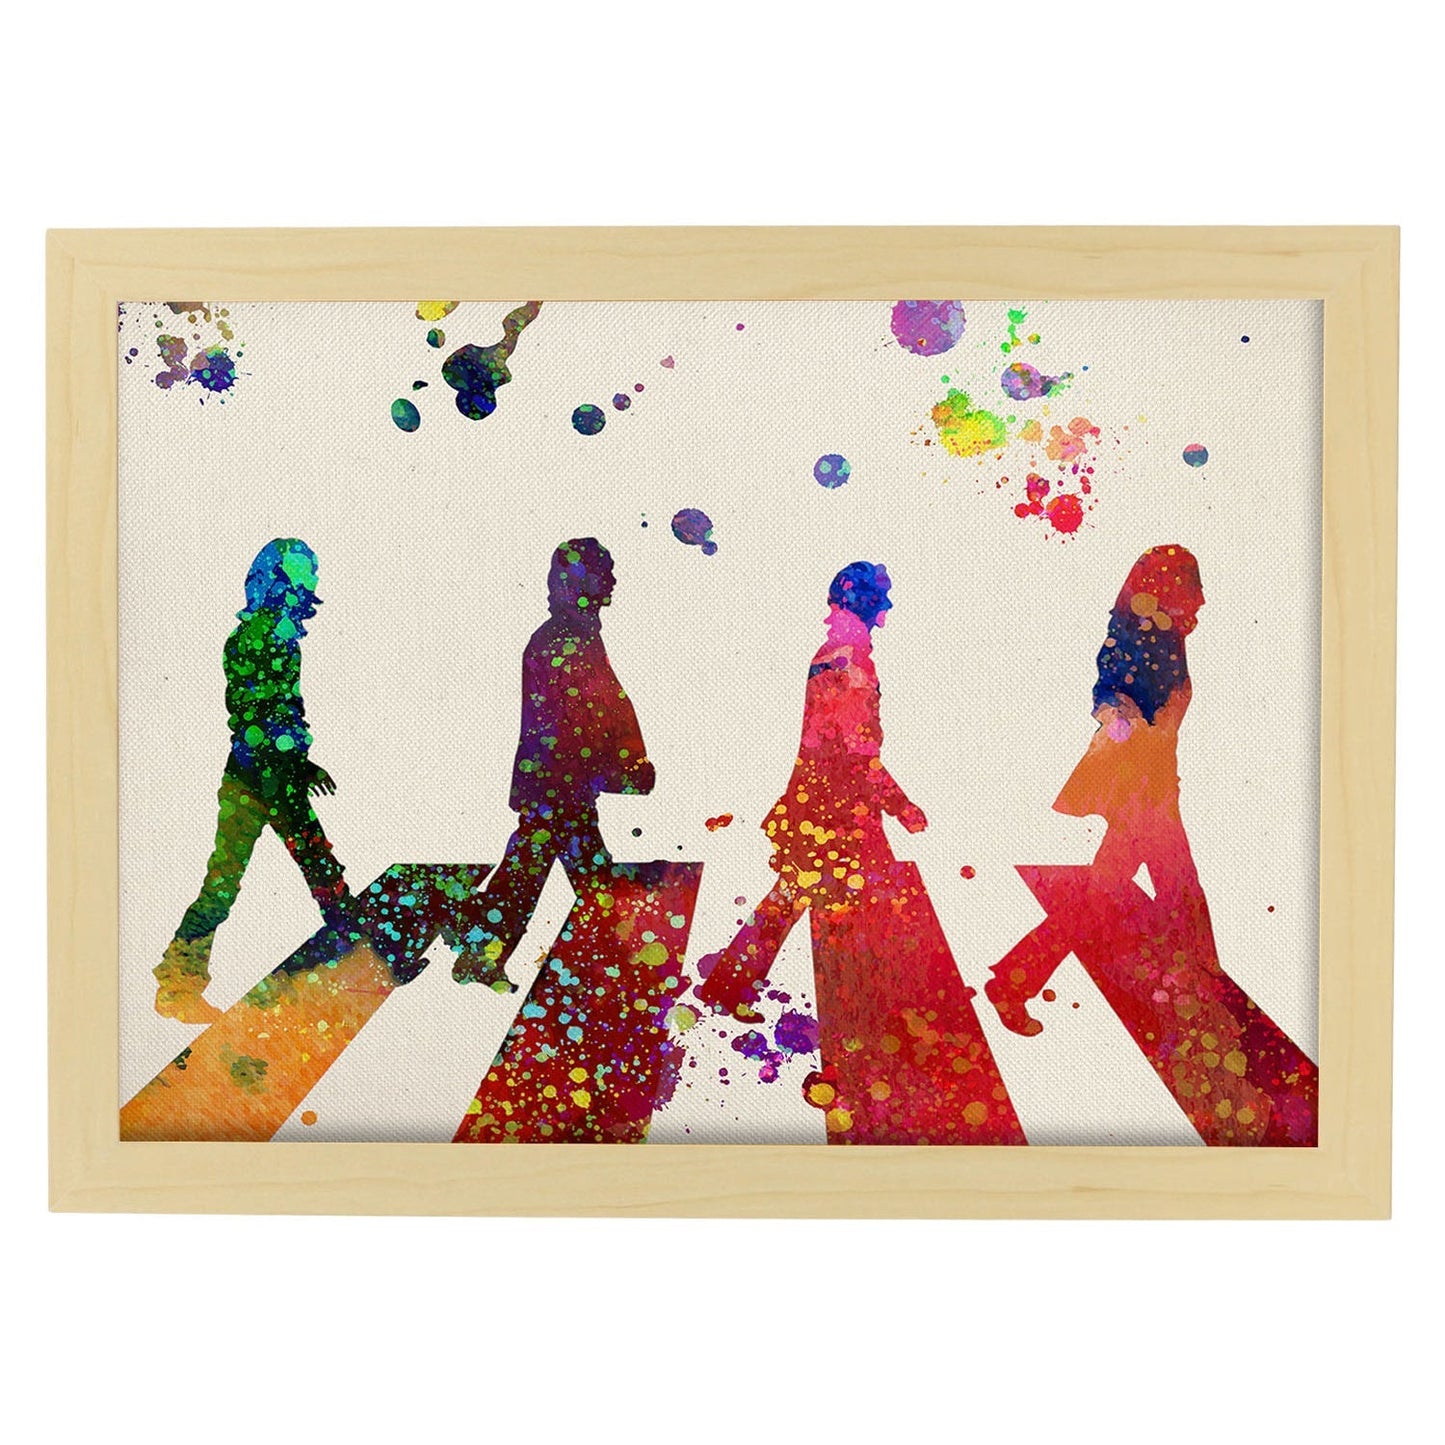 Lámina de la banda de música The Beatles (paso de cebra) en . Poster estilo explosión de color. Lámina de papel 250 gr.-Artwork-Nacnic-A4-Marco Madera clara-Nacnic Estudio SL